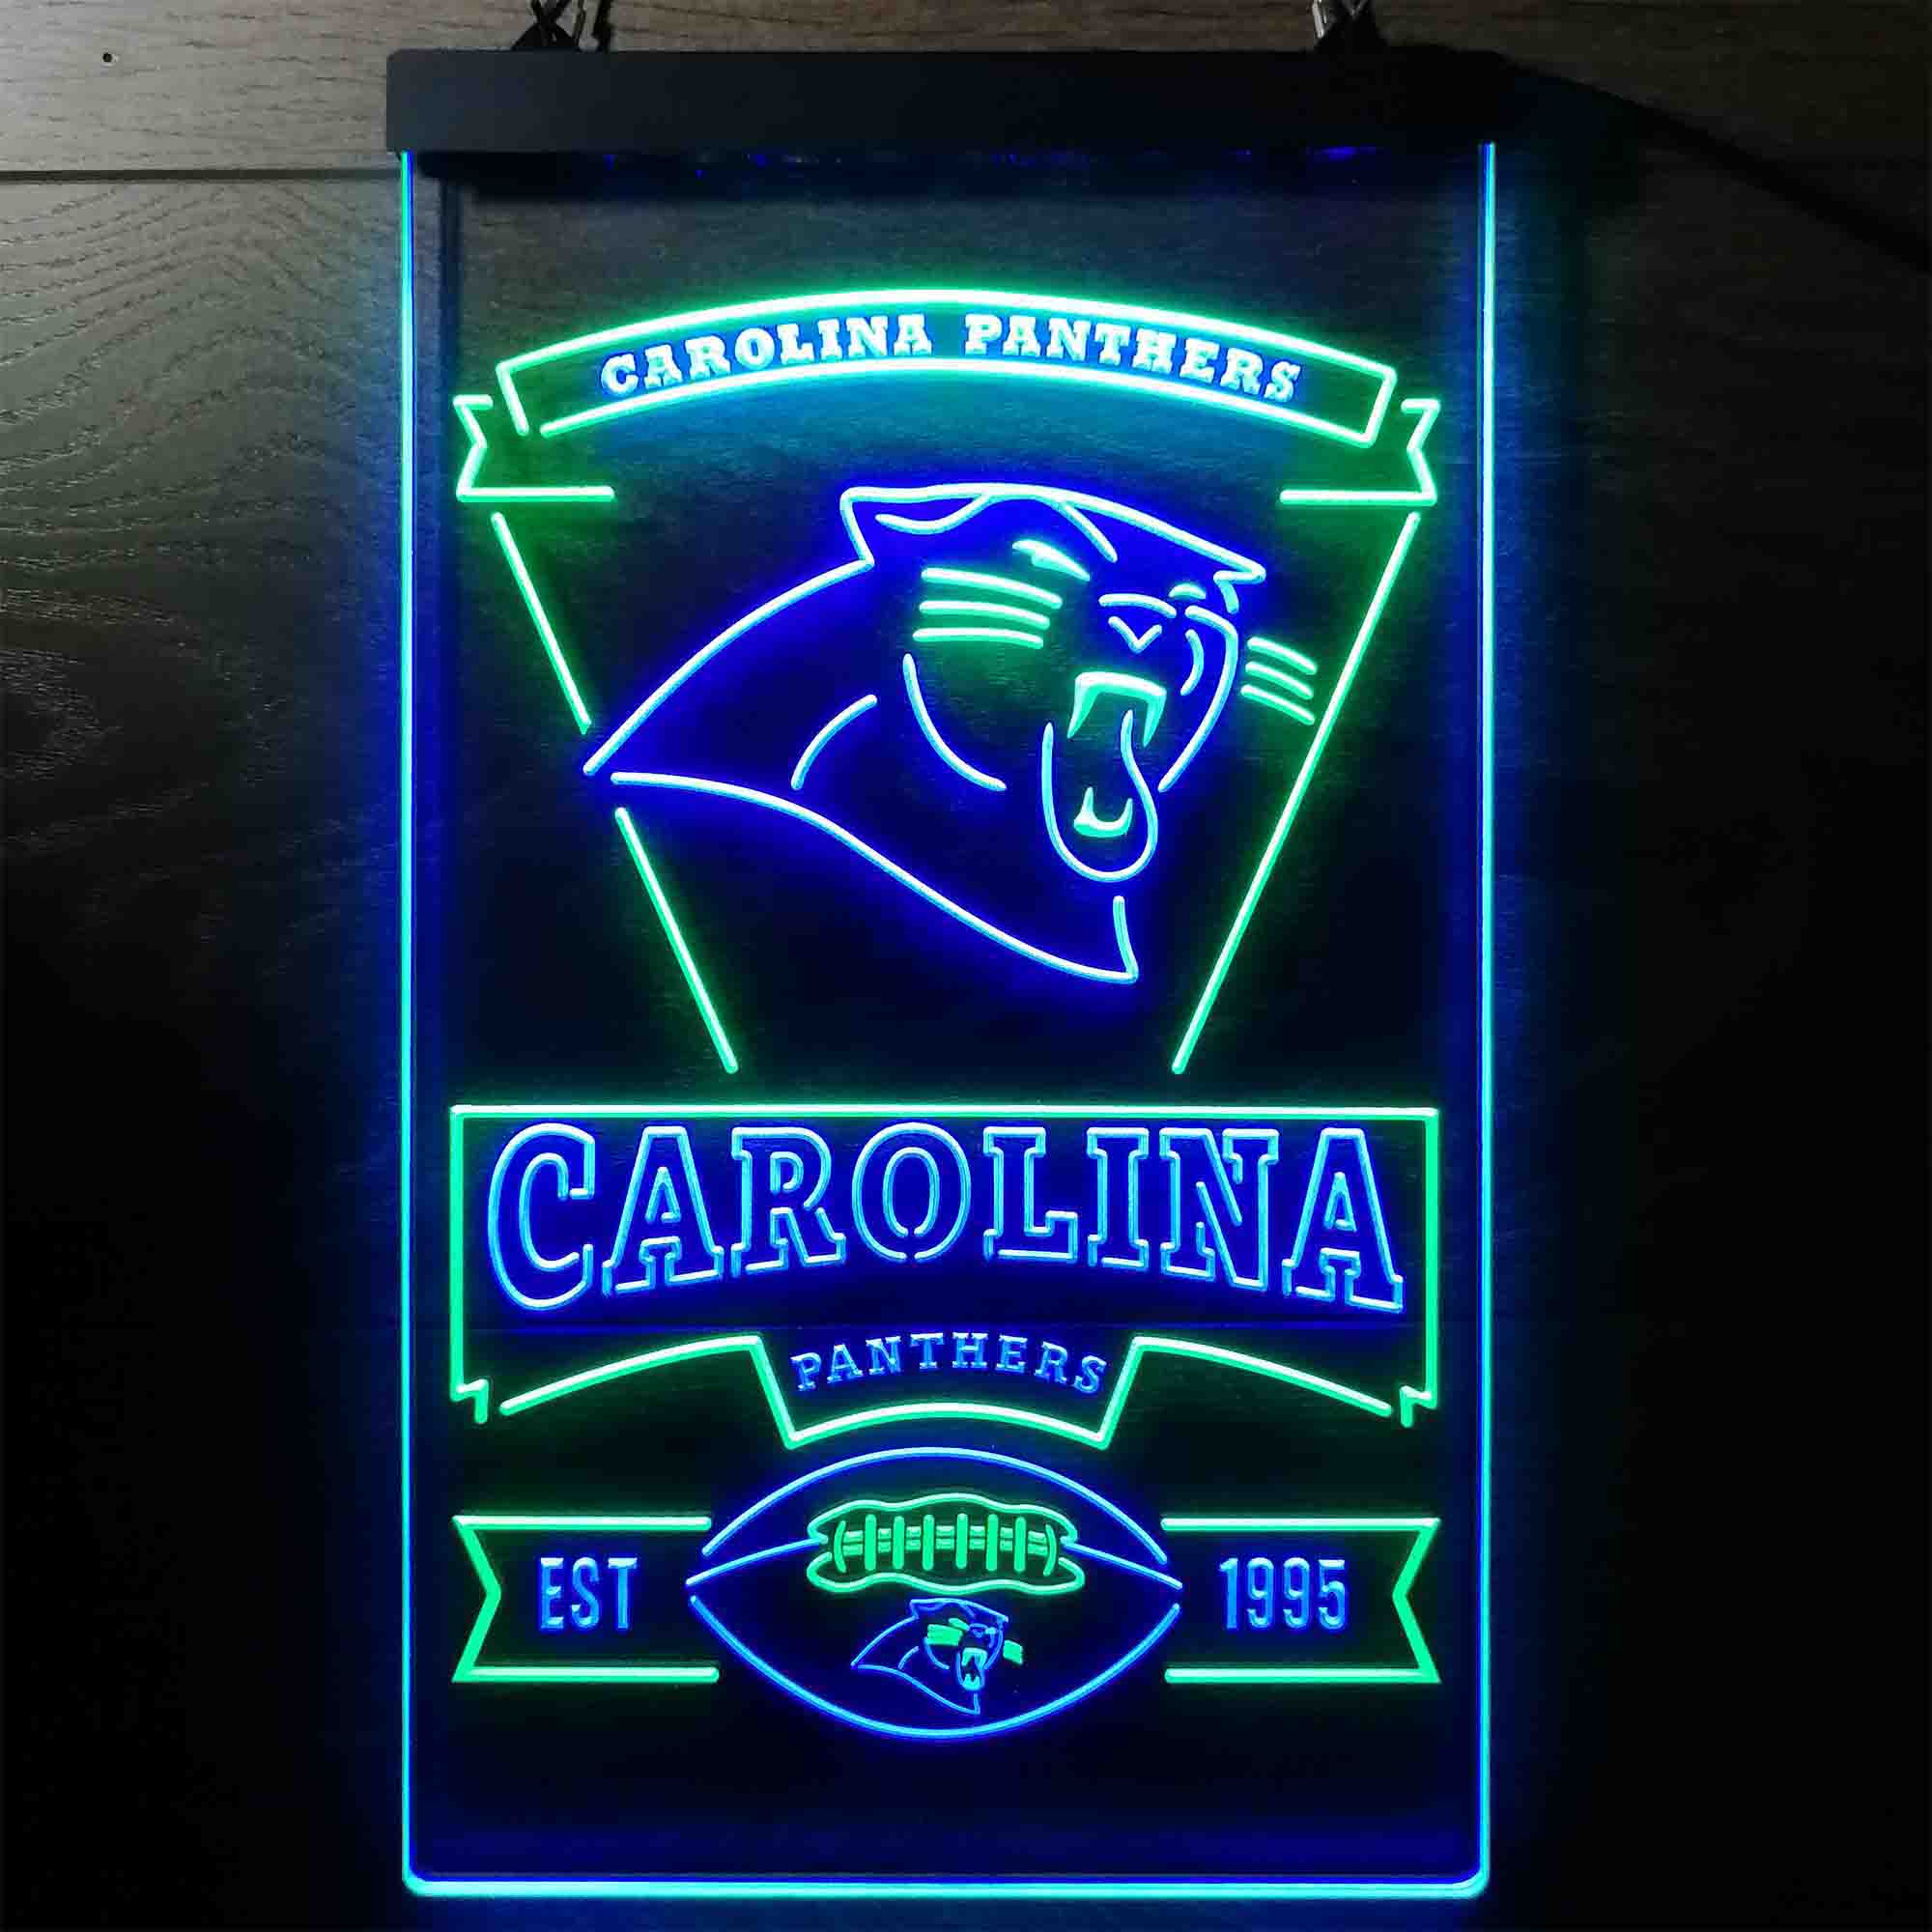 Carolina Panthers EST 1995 Neon LED Sign